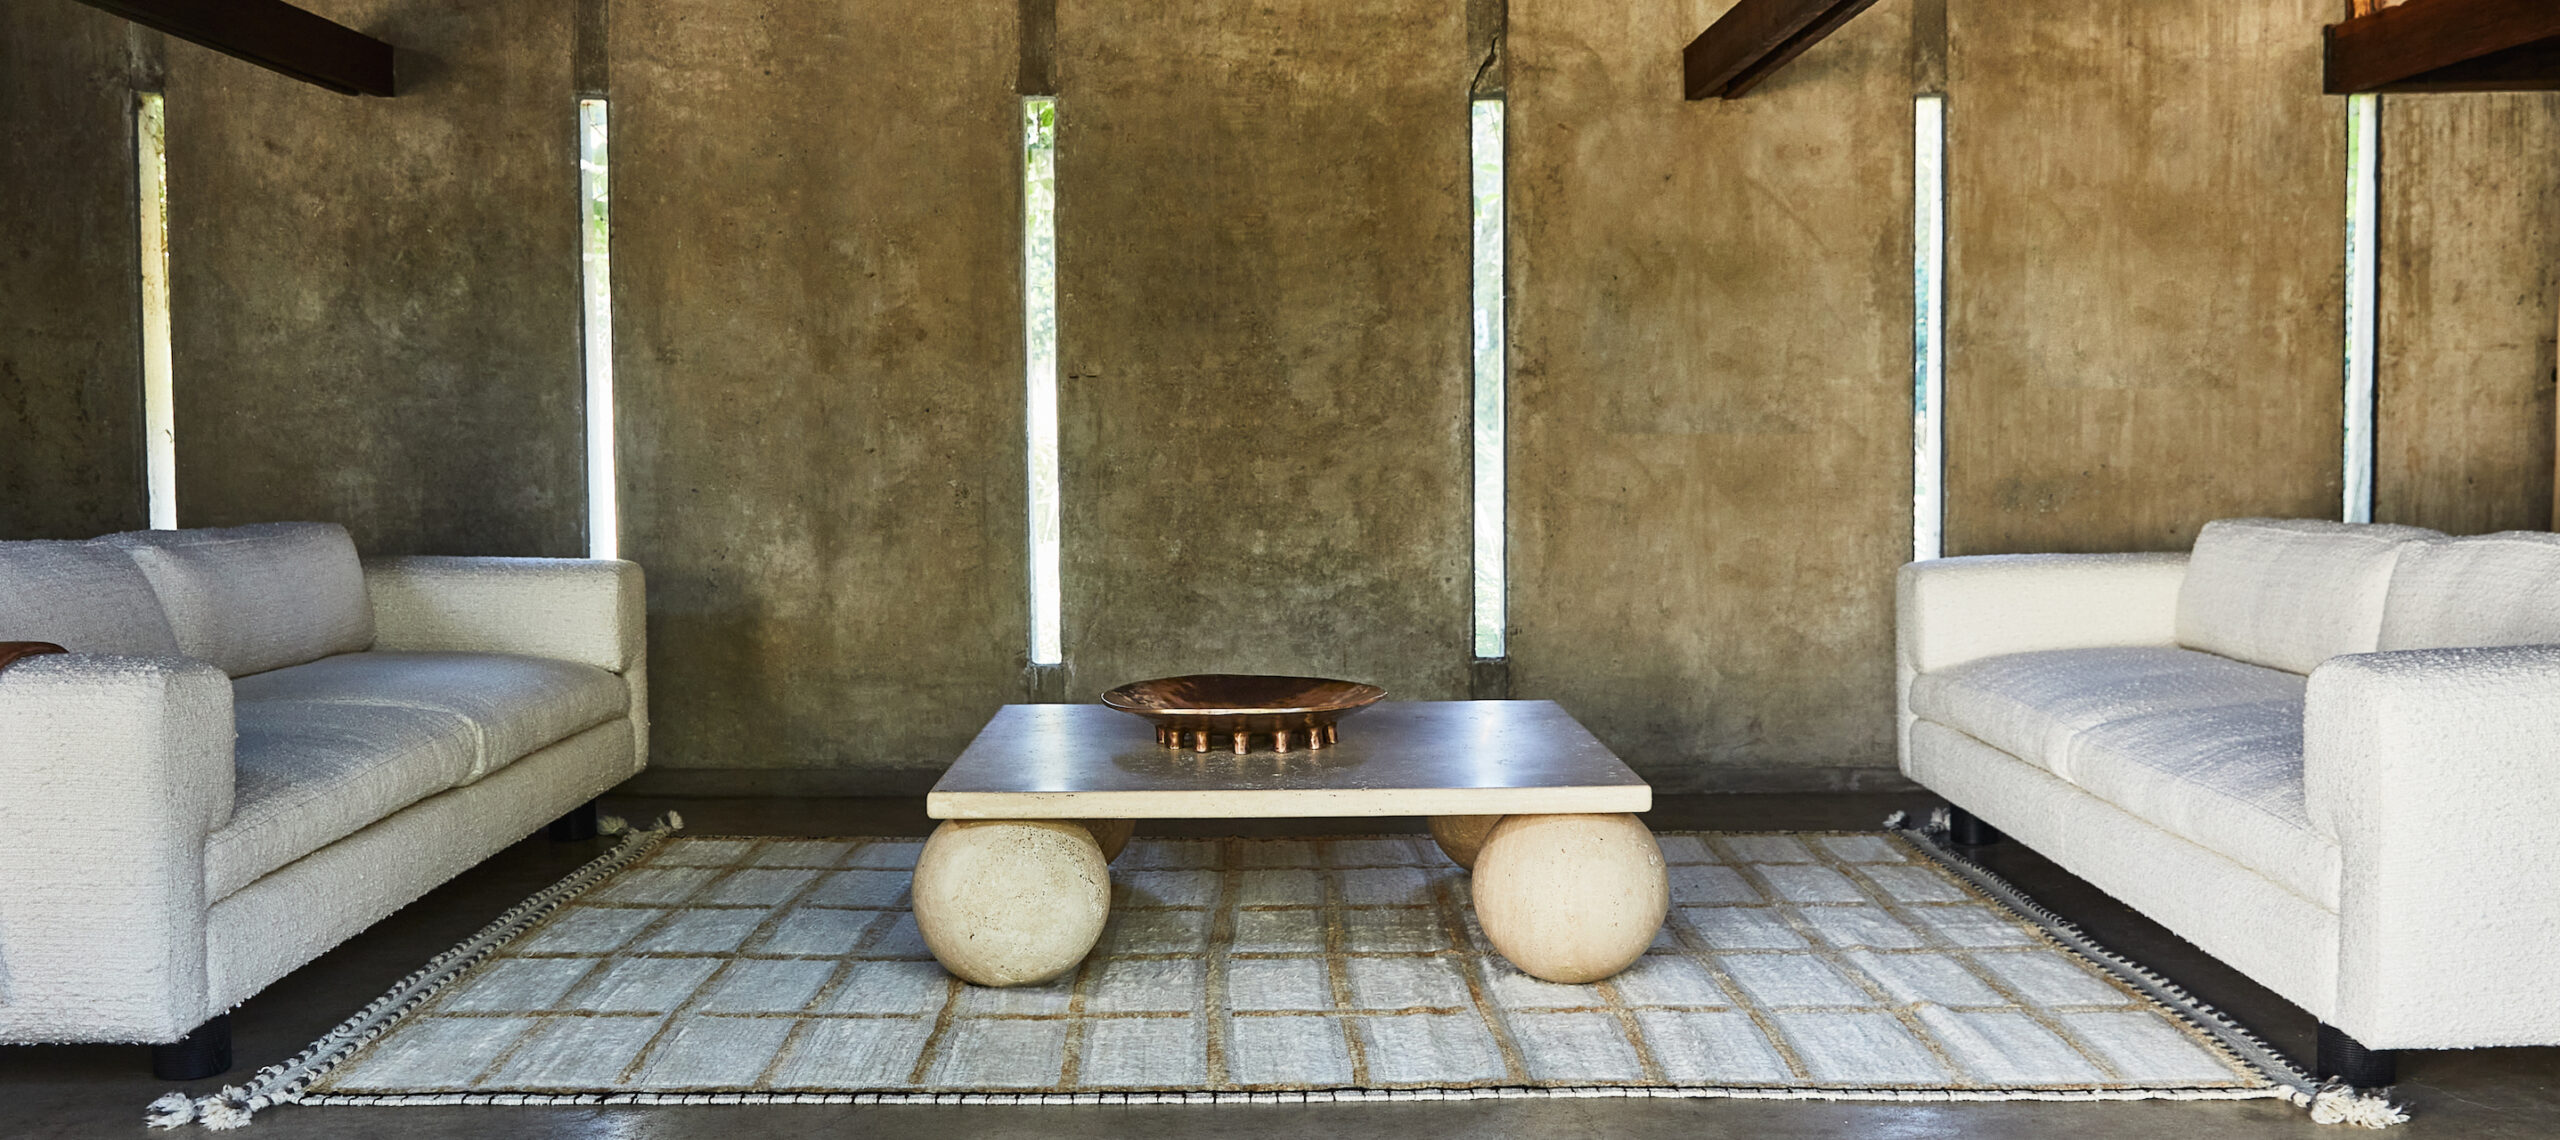 Japanese-inspired furniture by Kelly Wearstler